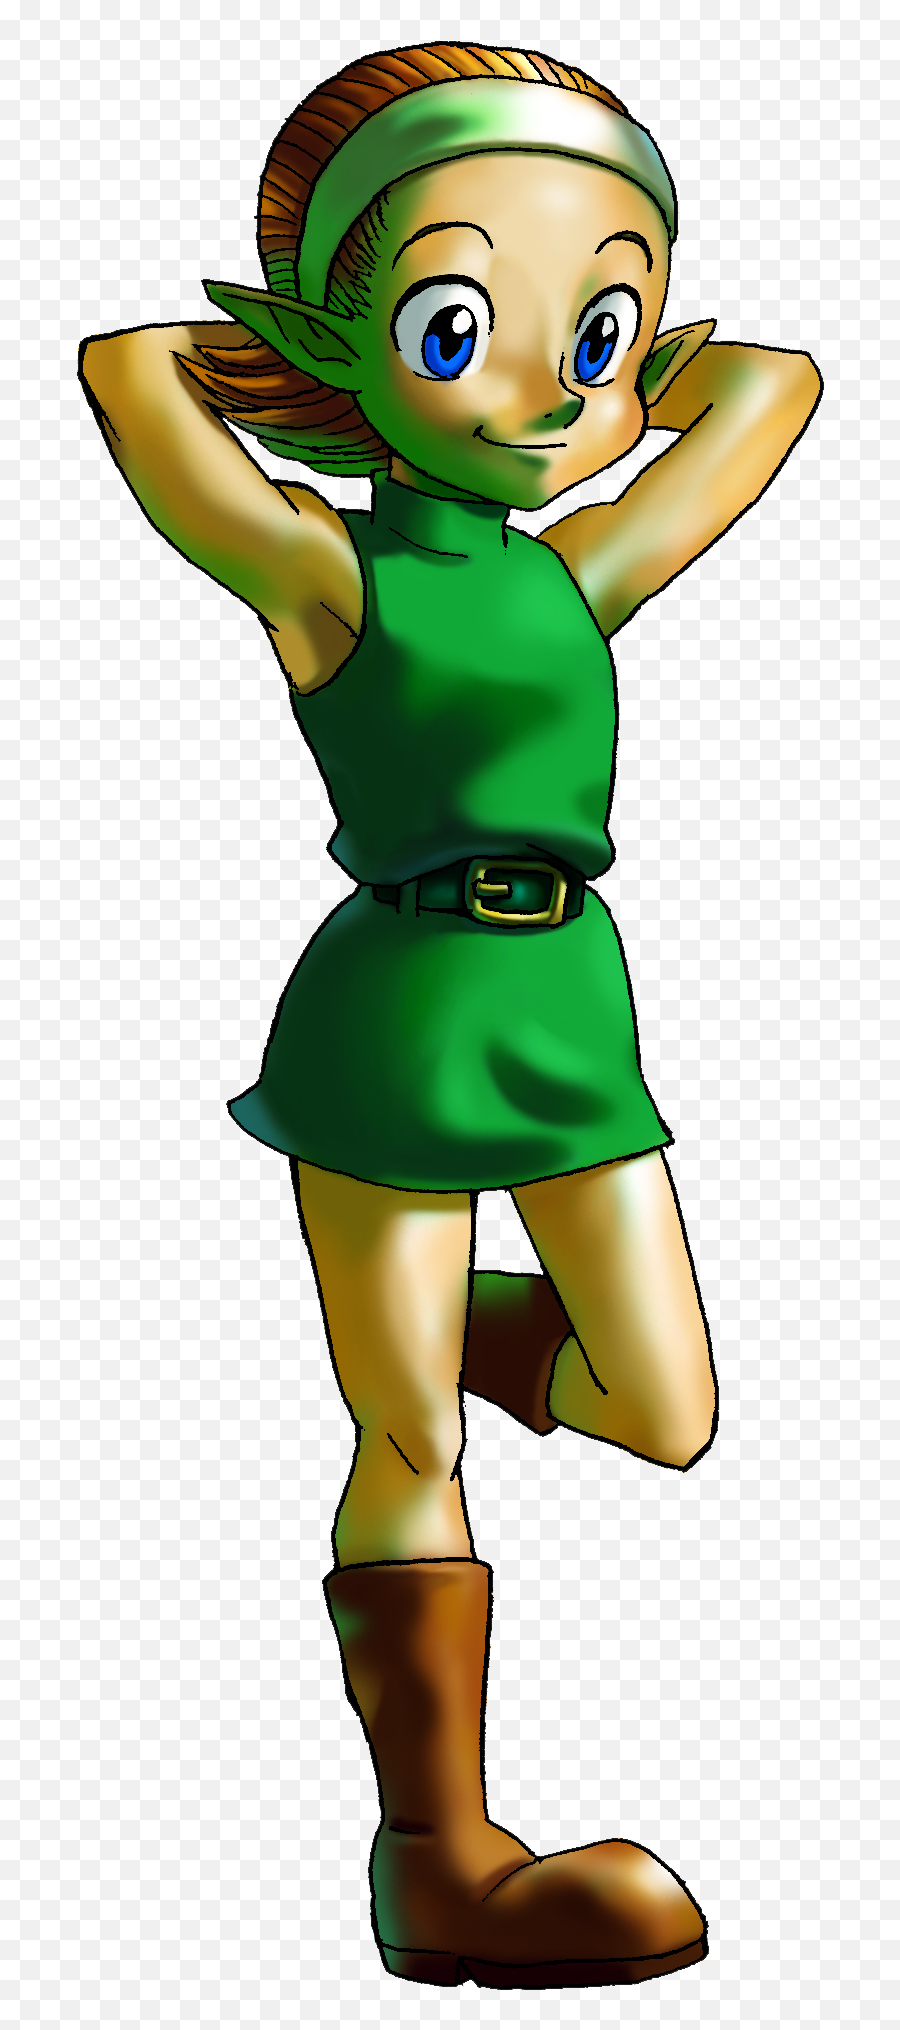 Ocarina Of Time - Princess Zelda From Ocarina Of Time Emoji,Zelda Anjean Emotion